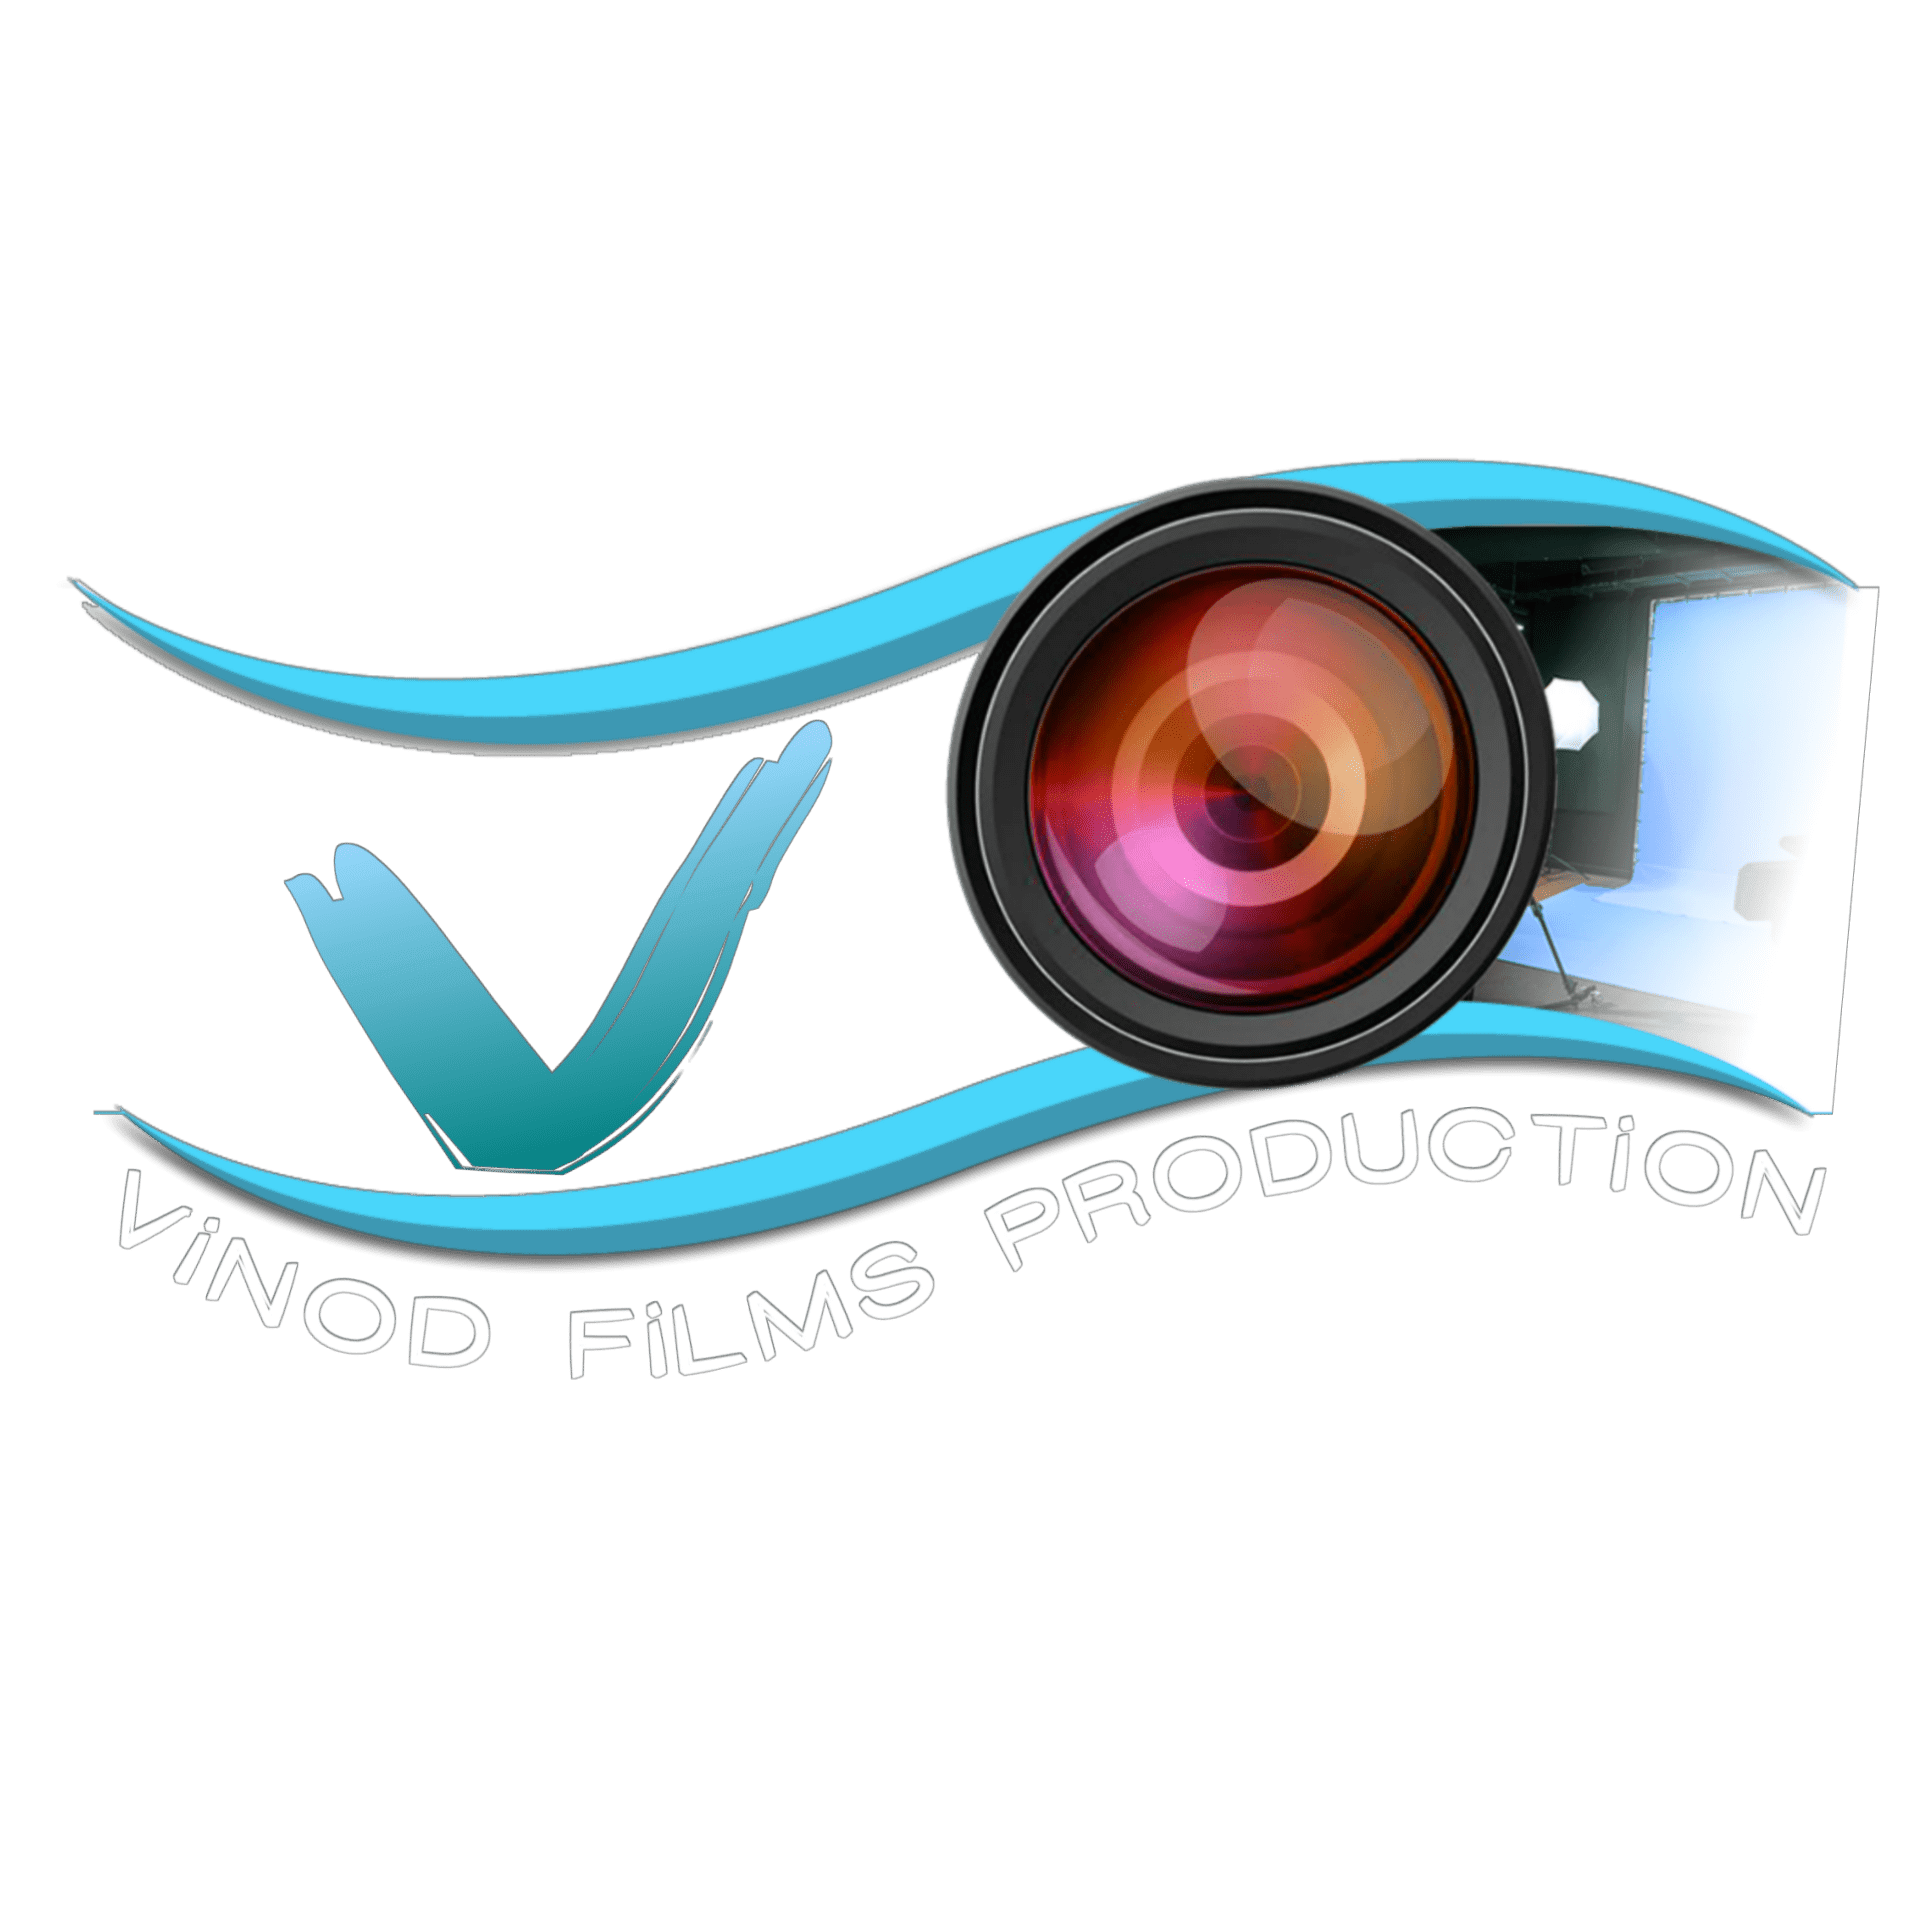 Vfilms Production